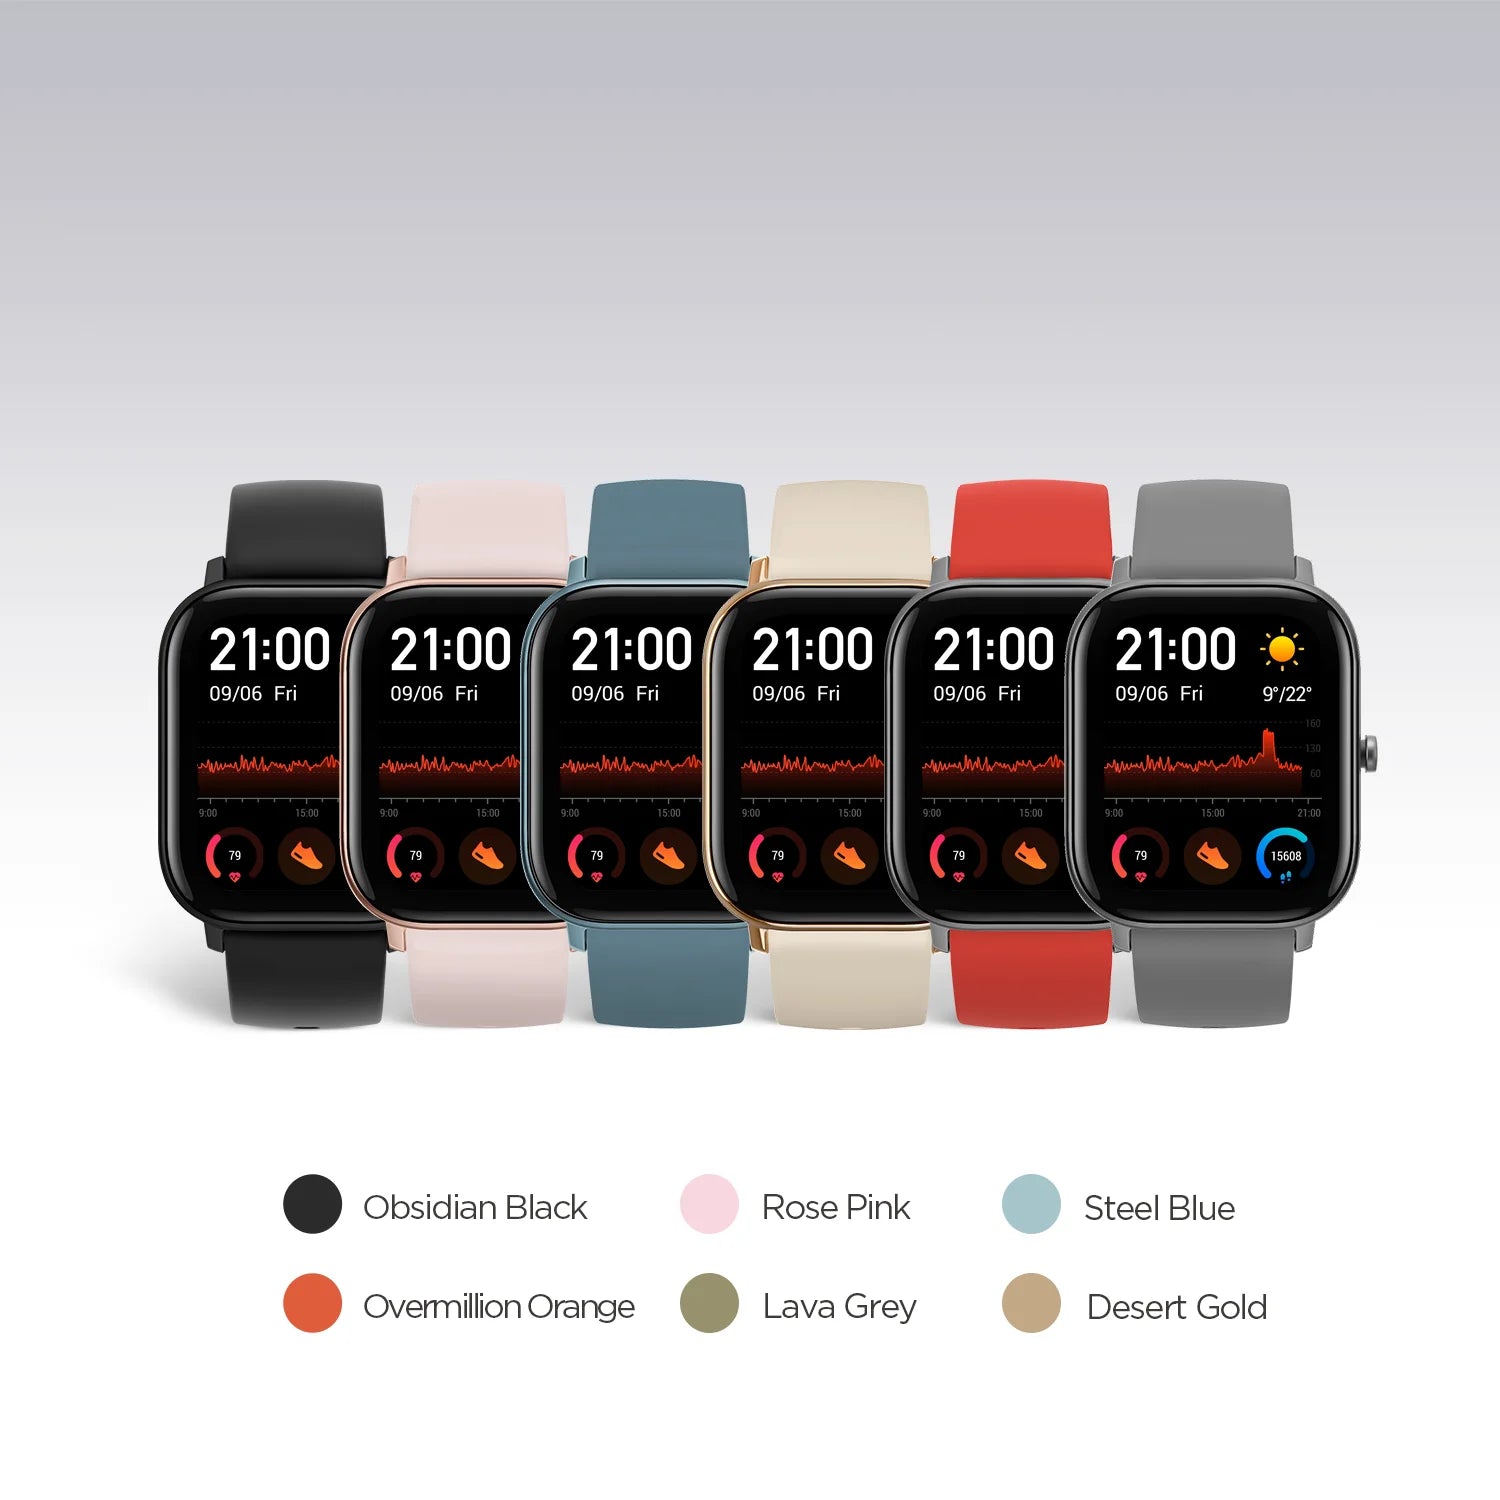 Amazfit GTS Smart Watch: Stylish Waterproof GPS Smartwatch for Men with Long Battery  computerlum.com   